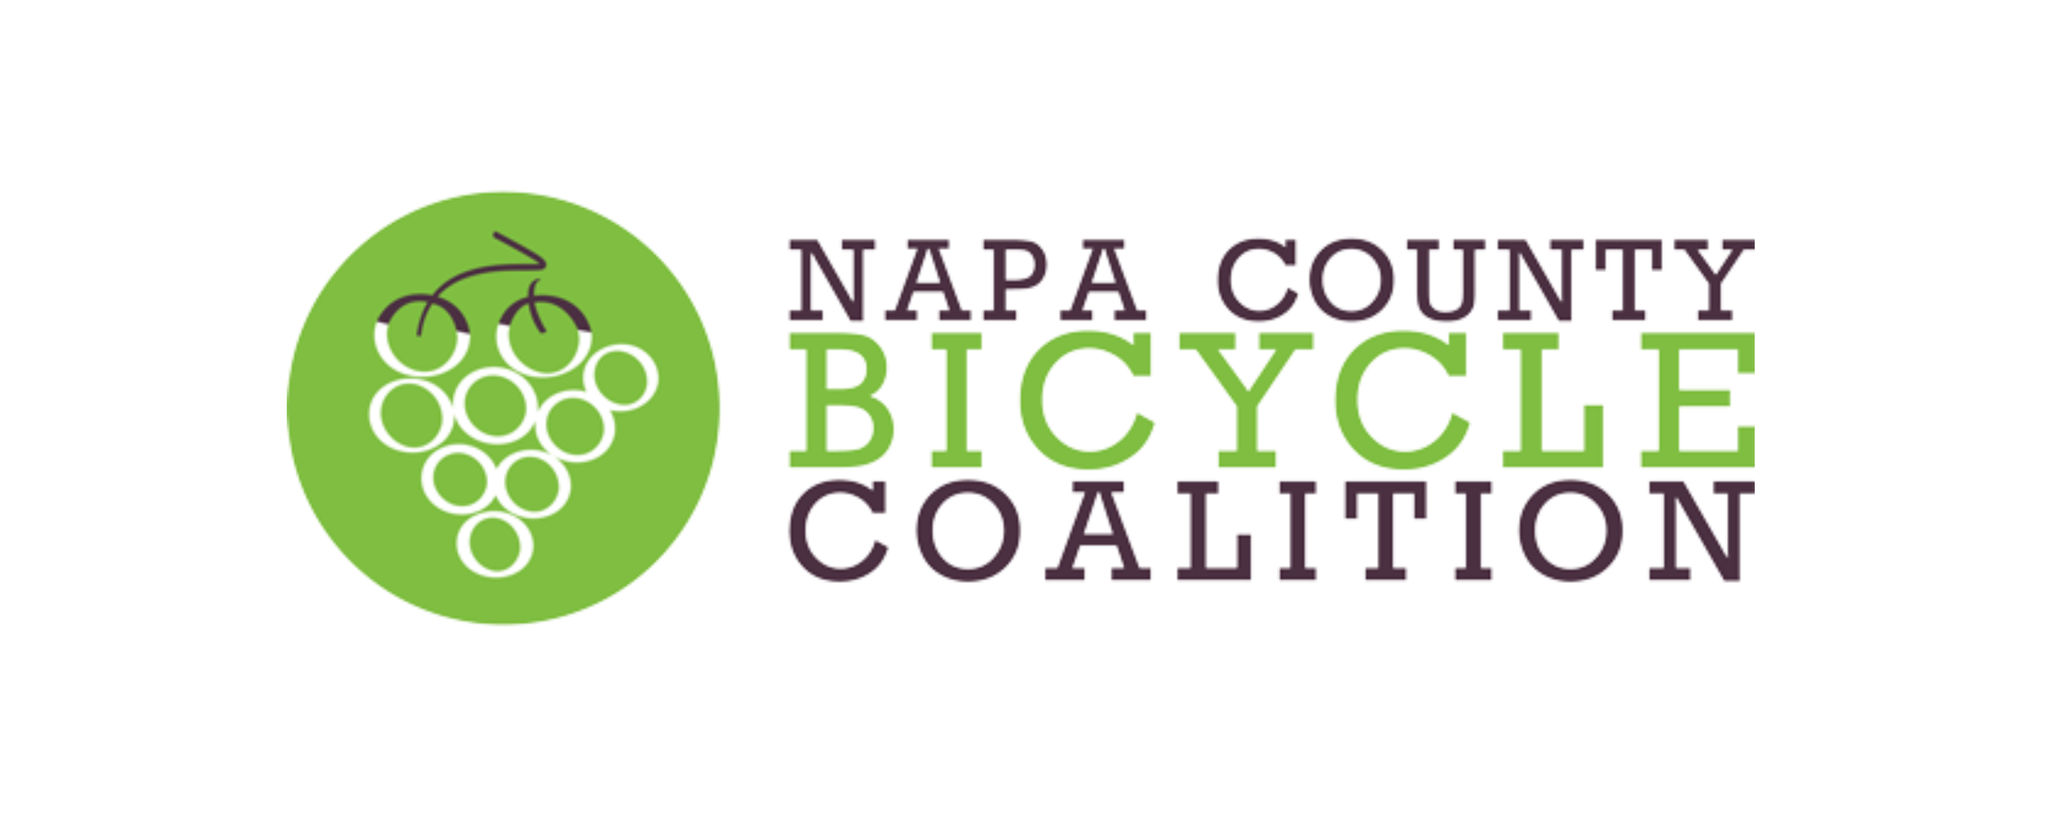 Napa County Bicycle Coalition logo